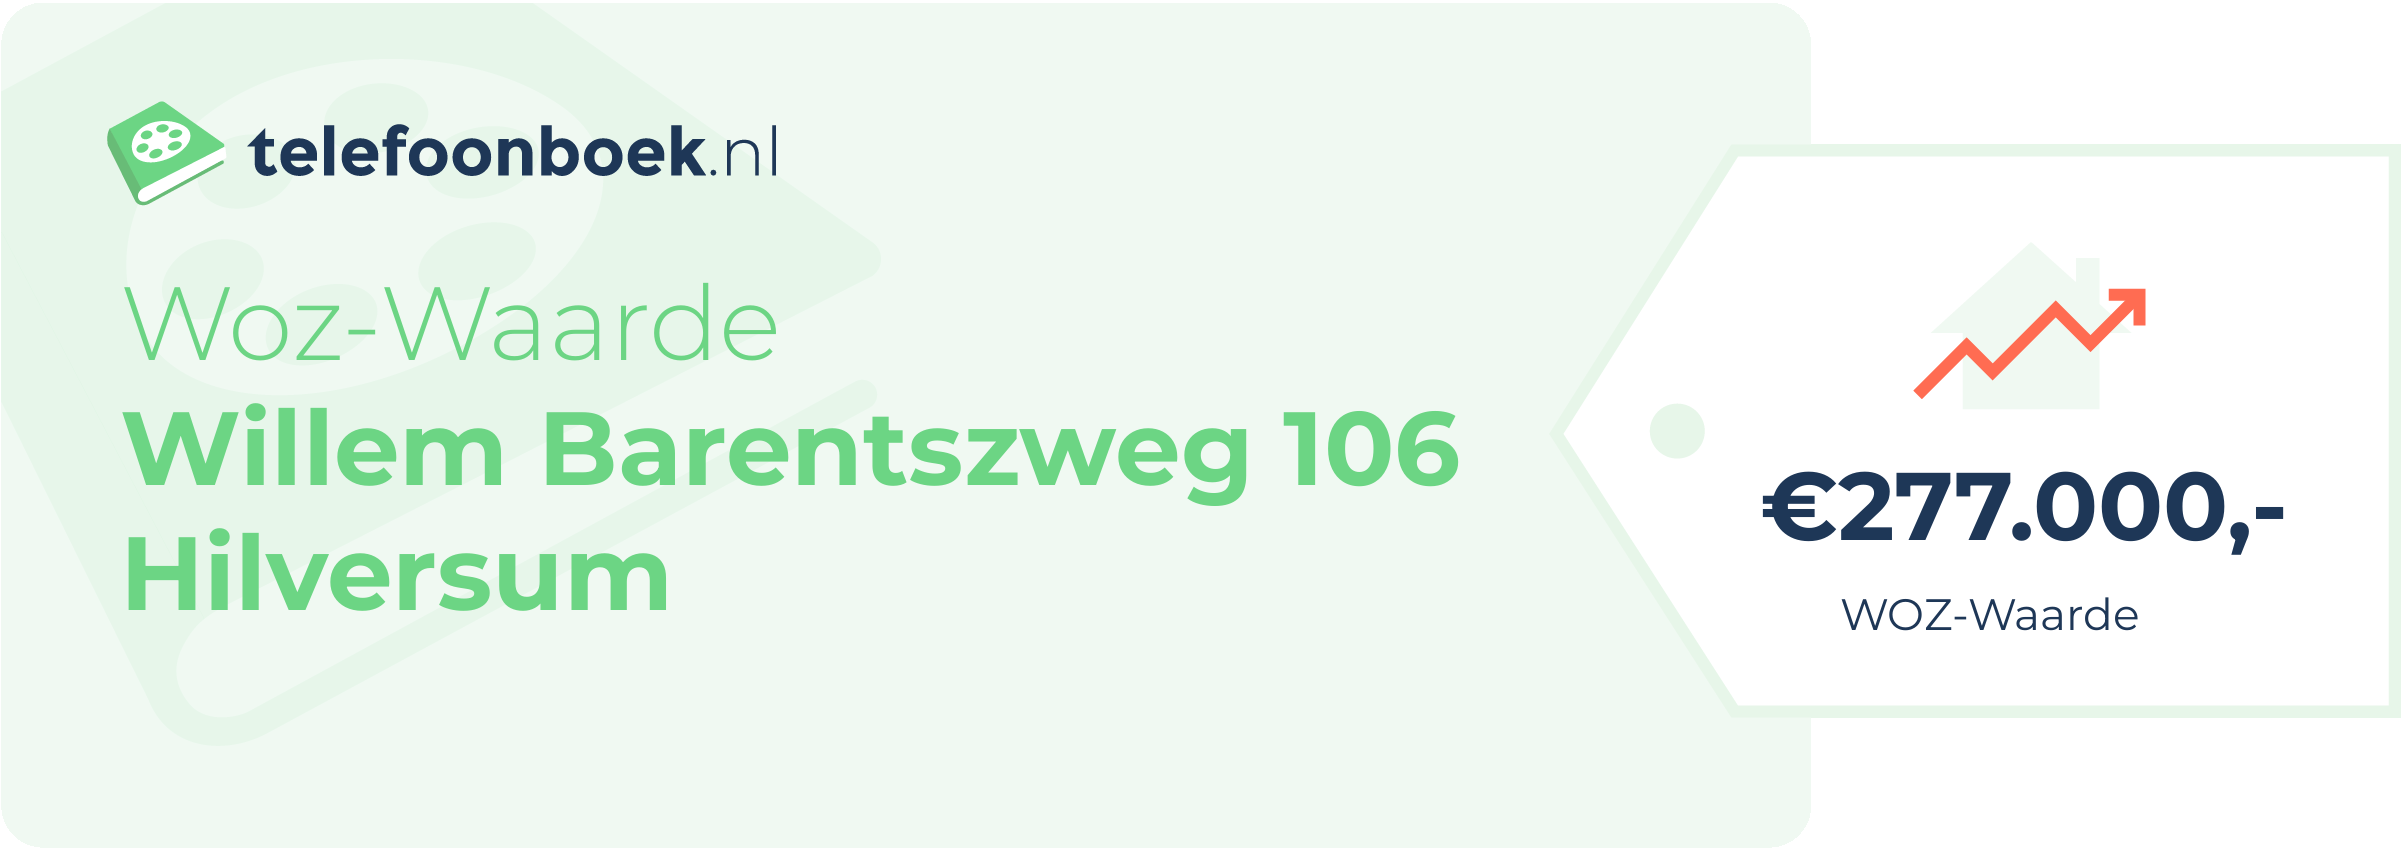 WOZ-waarde Willem Barentszweg 106 Hilversum